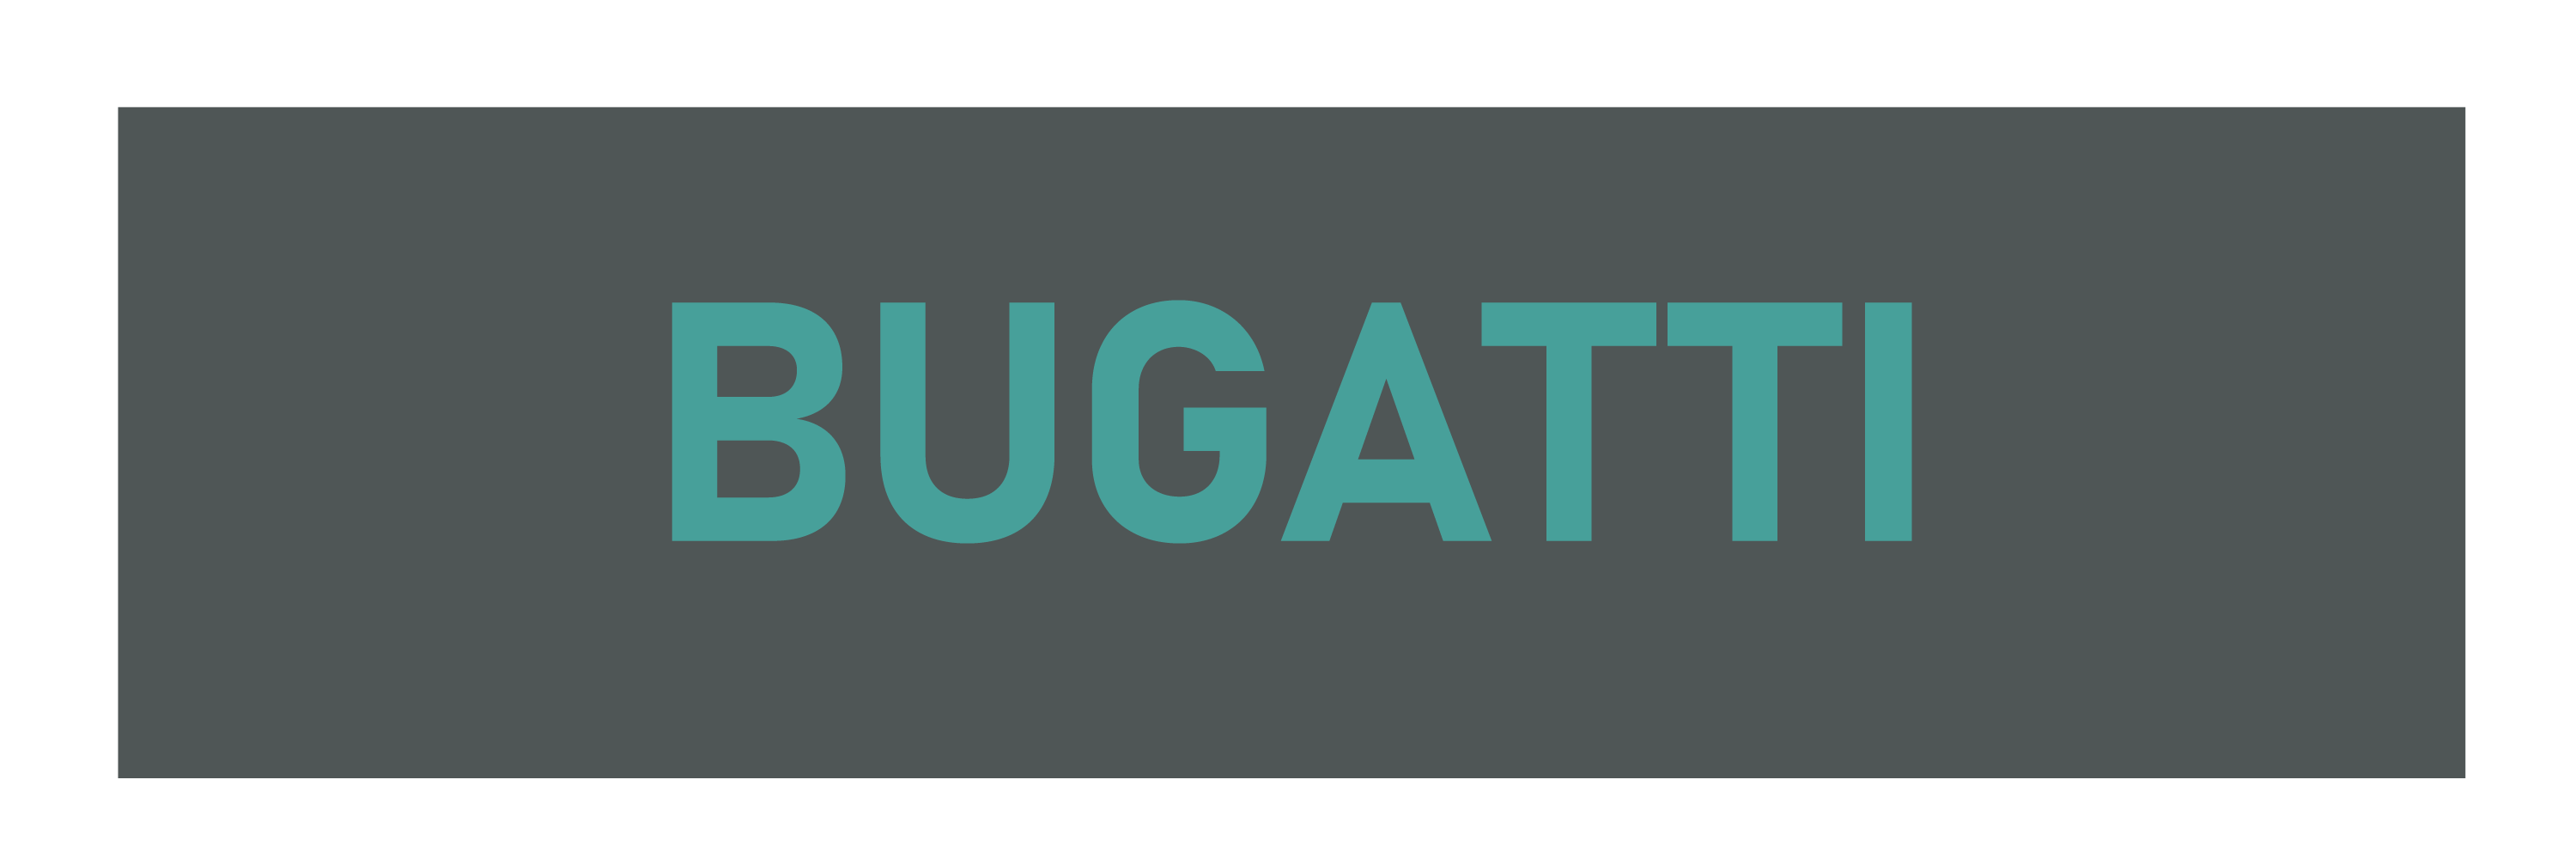 bugatti-logo-alt